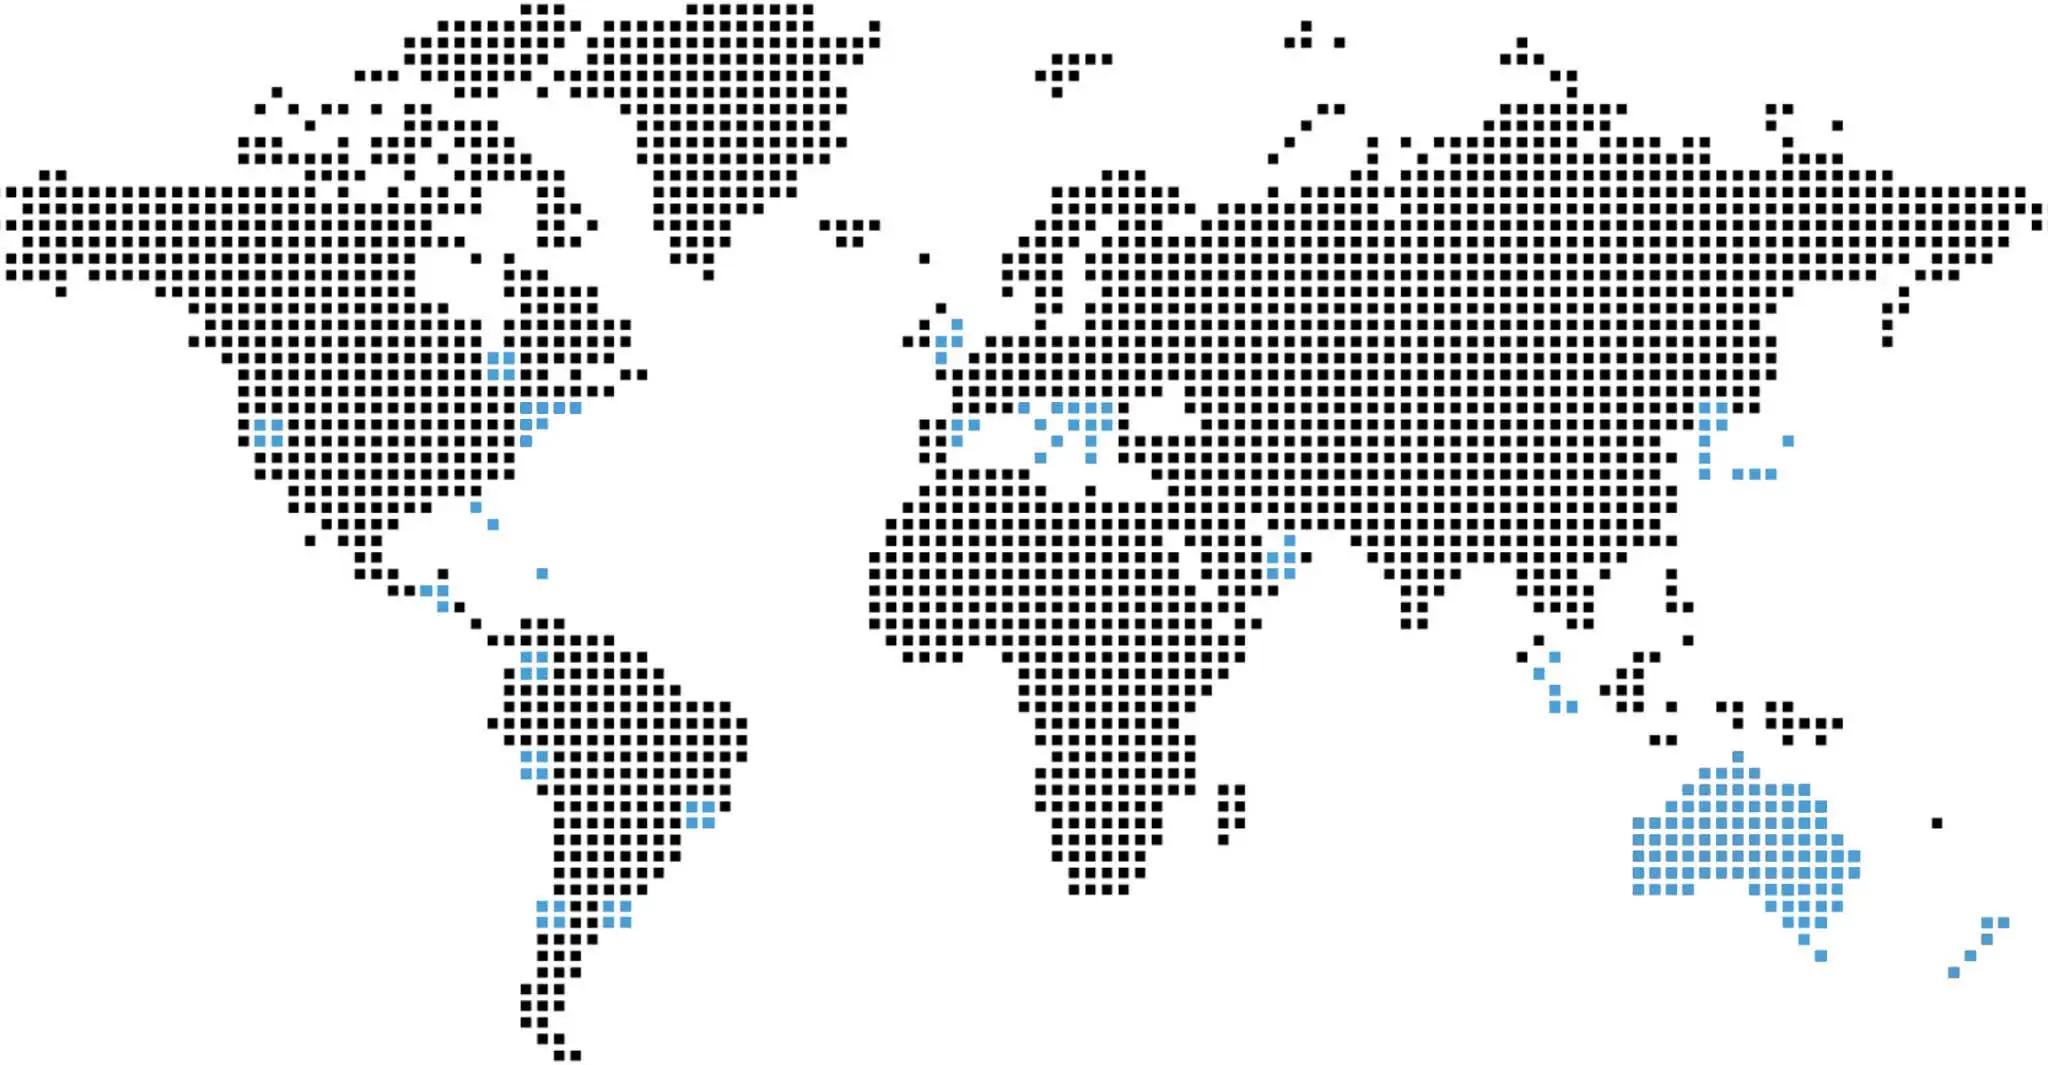 World map highlighting GAVA's global presence